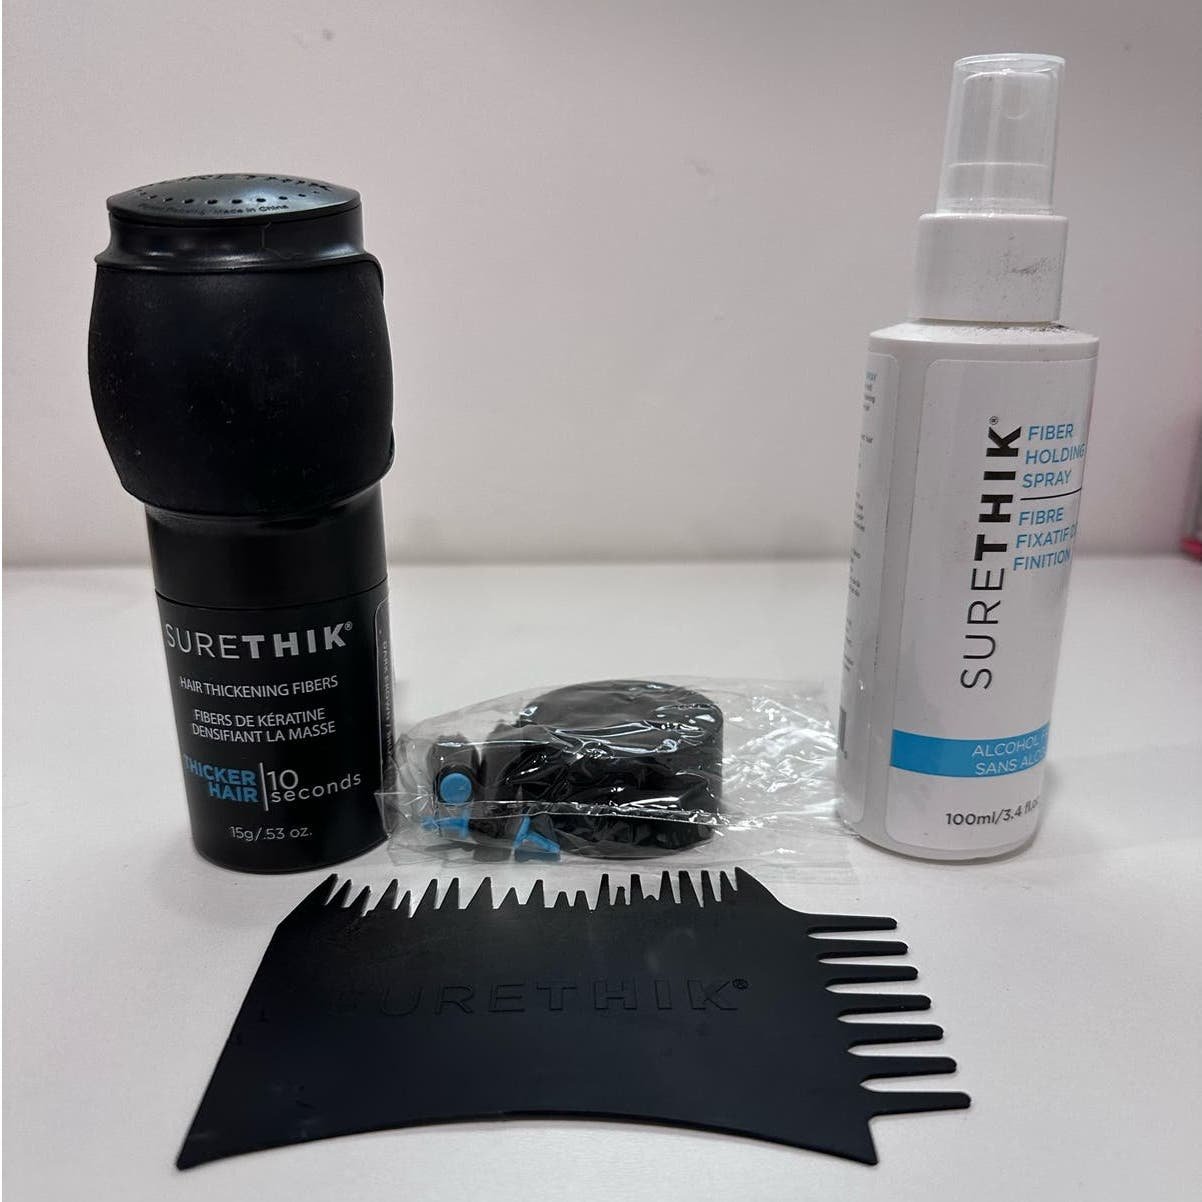 Surethik fibers hair loss starter kit, used only once. 